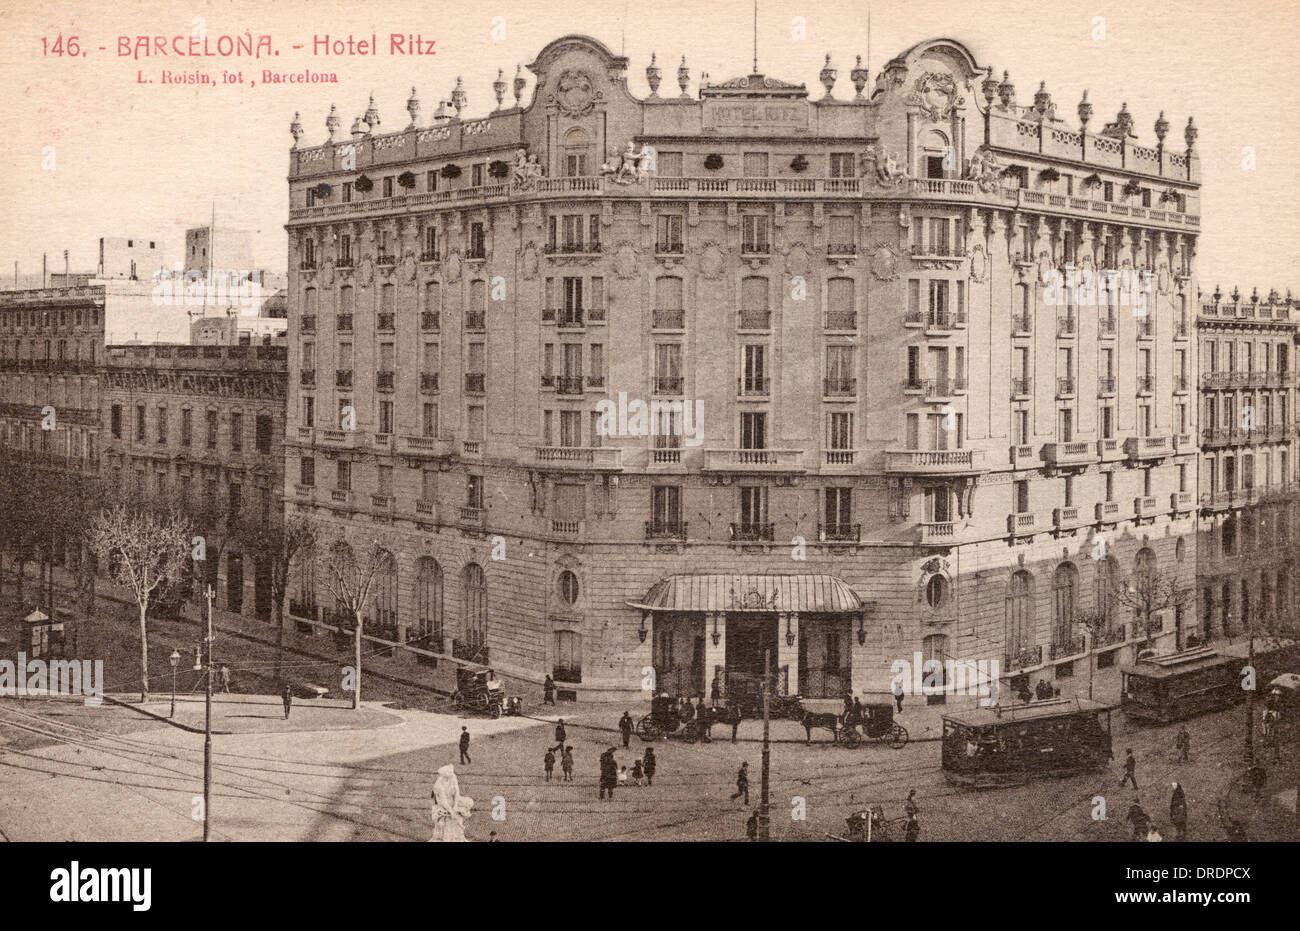 Hotel Ritz - Barcelone, Espagne Banque D'Images